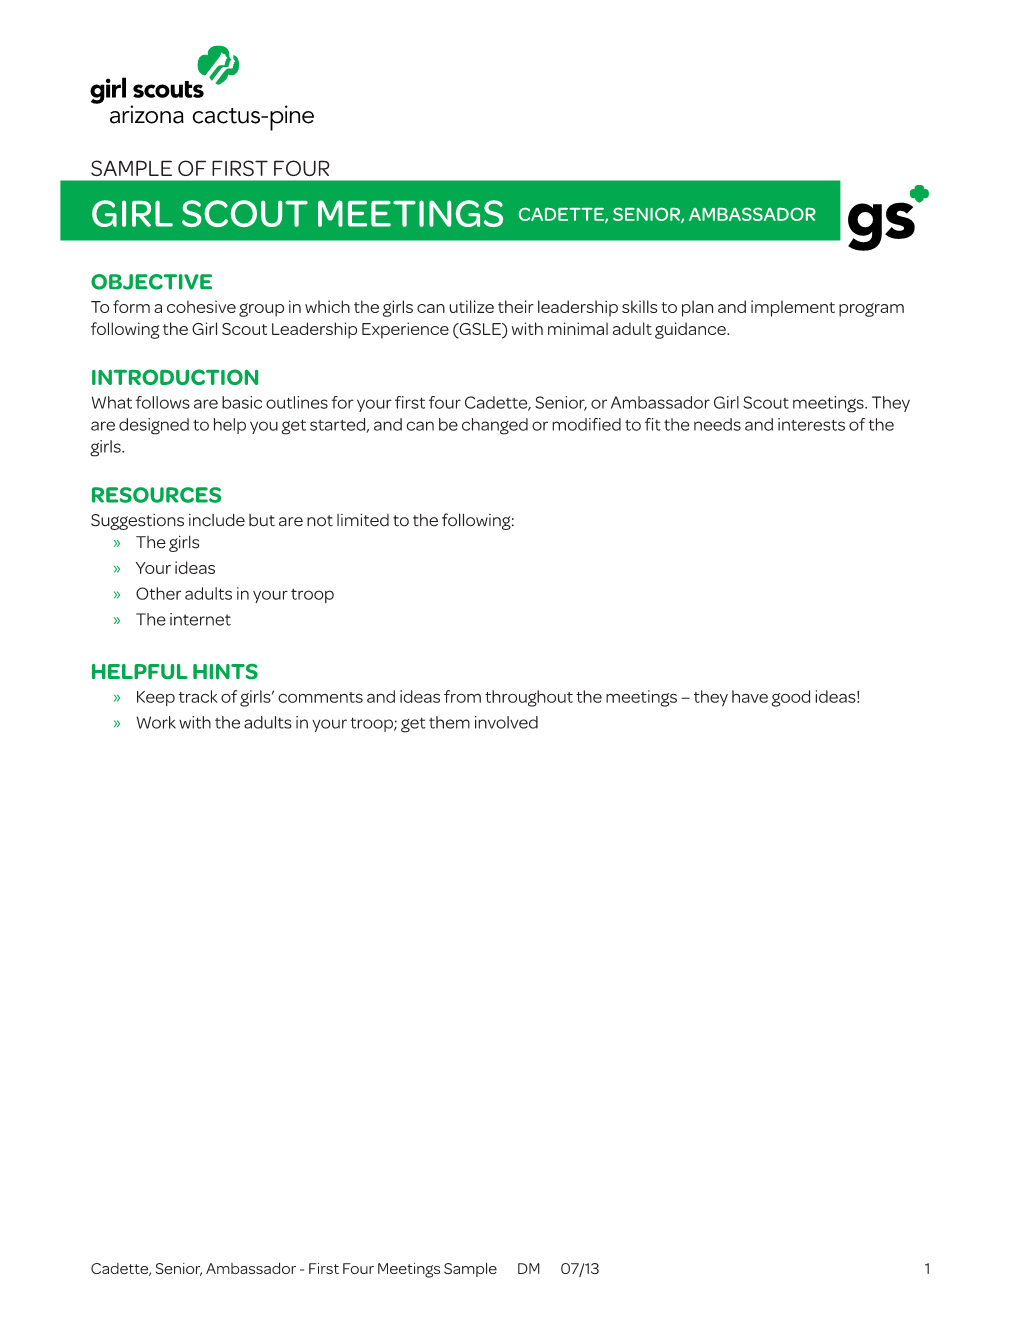 Girl Scout Meetings Cadette, Senior, Ambassador